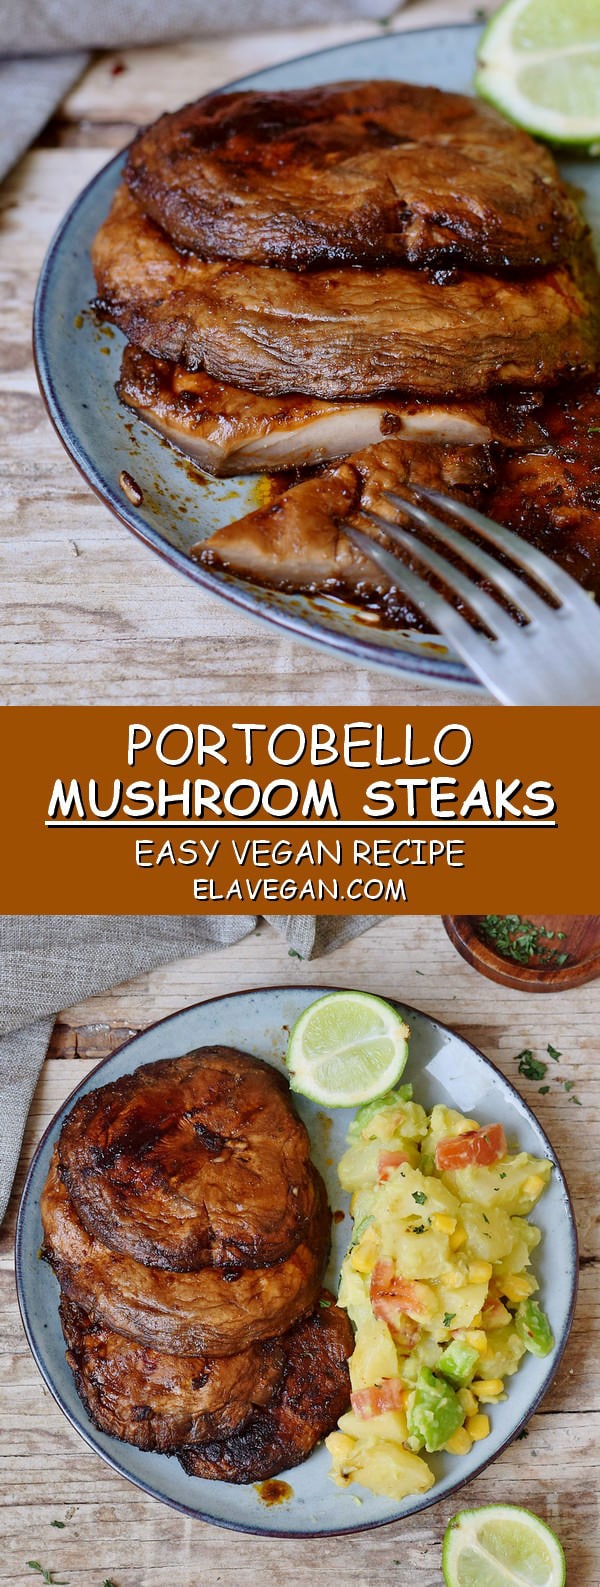 Vegan Portobello mushroom steaks easy recipe